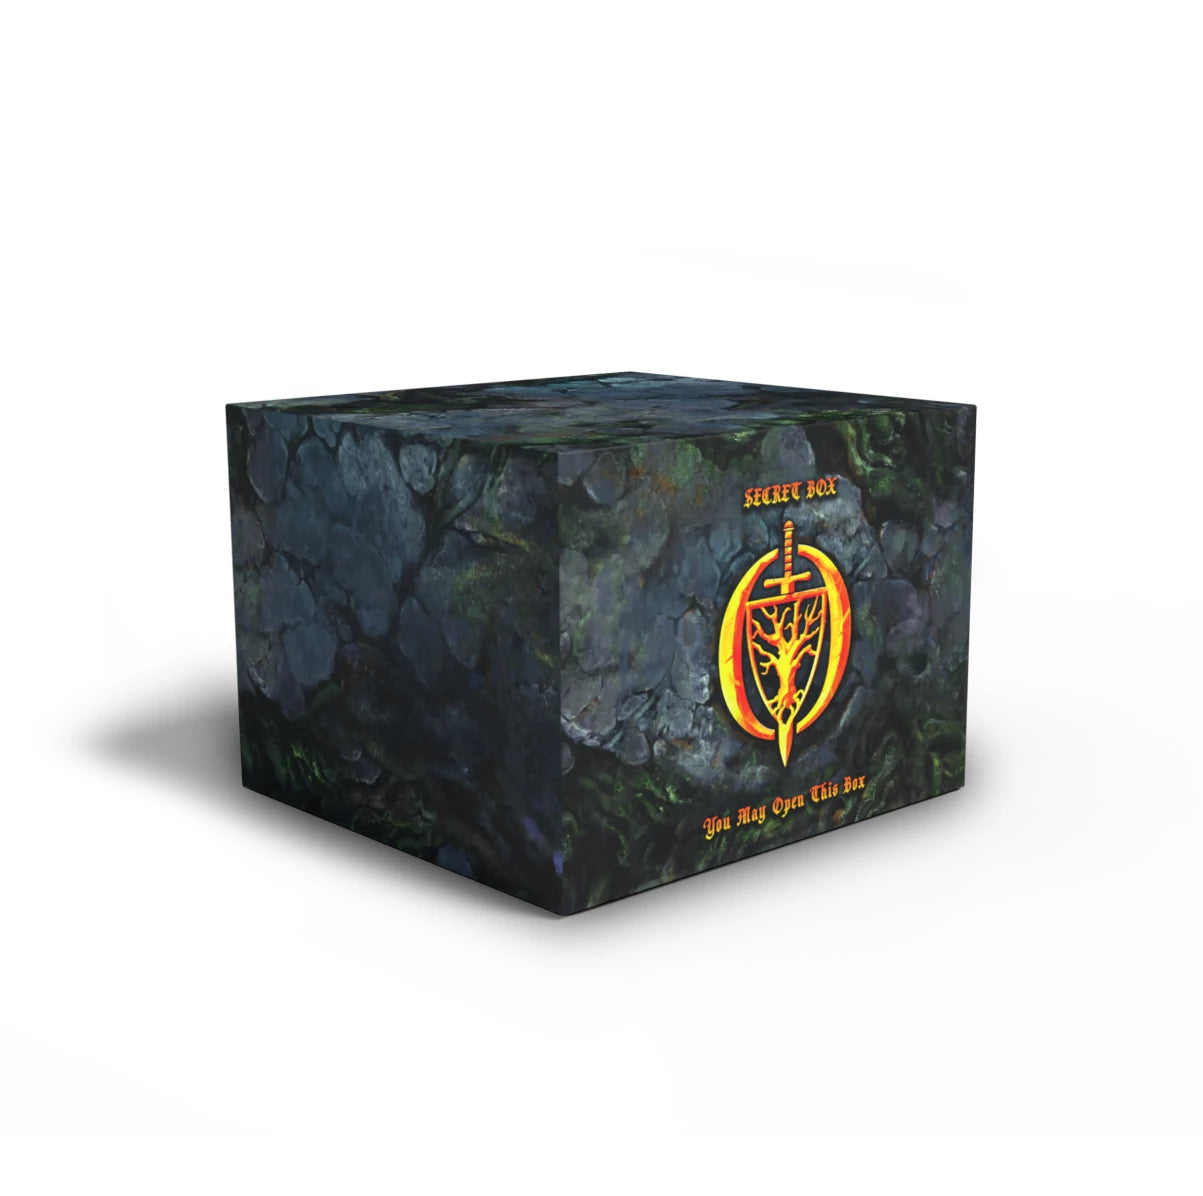 1st Edition Secret Box